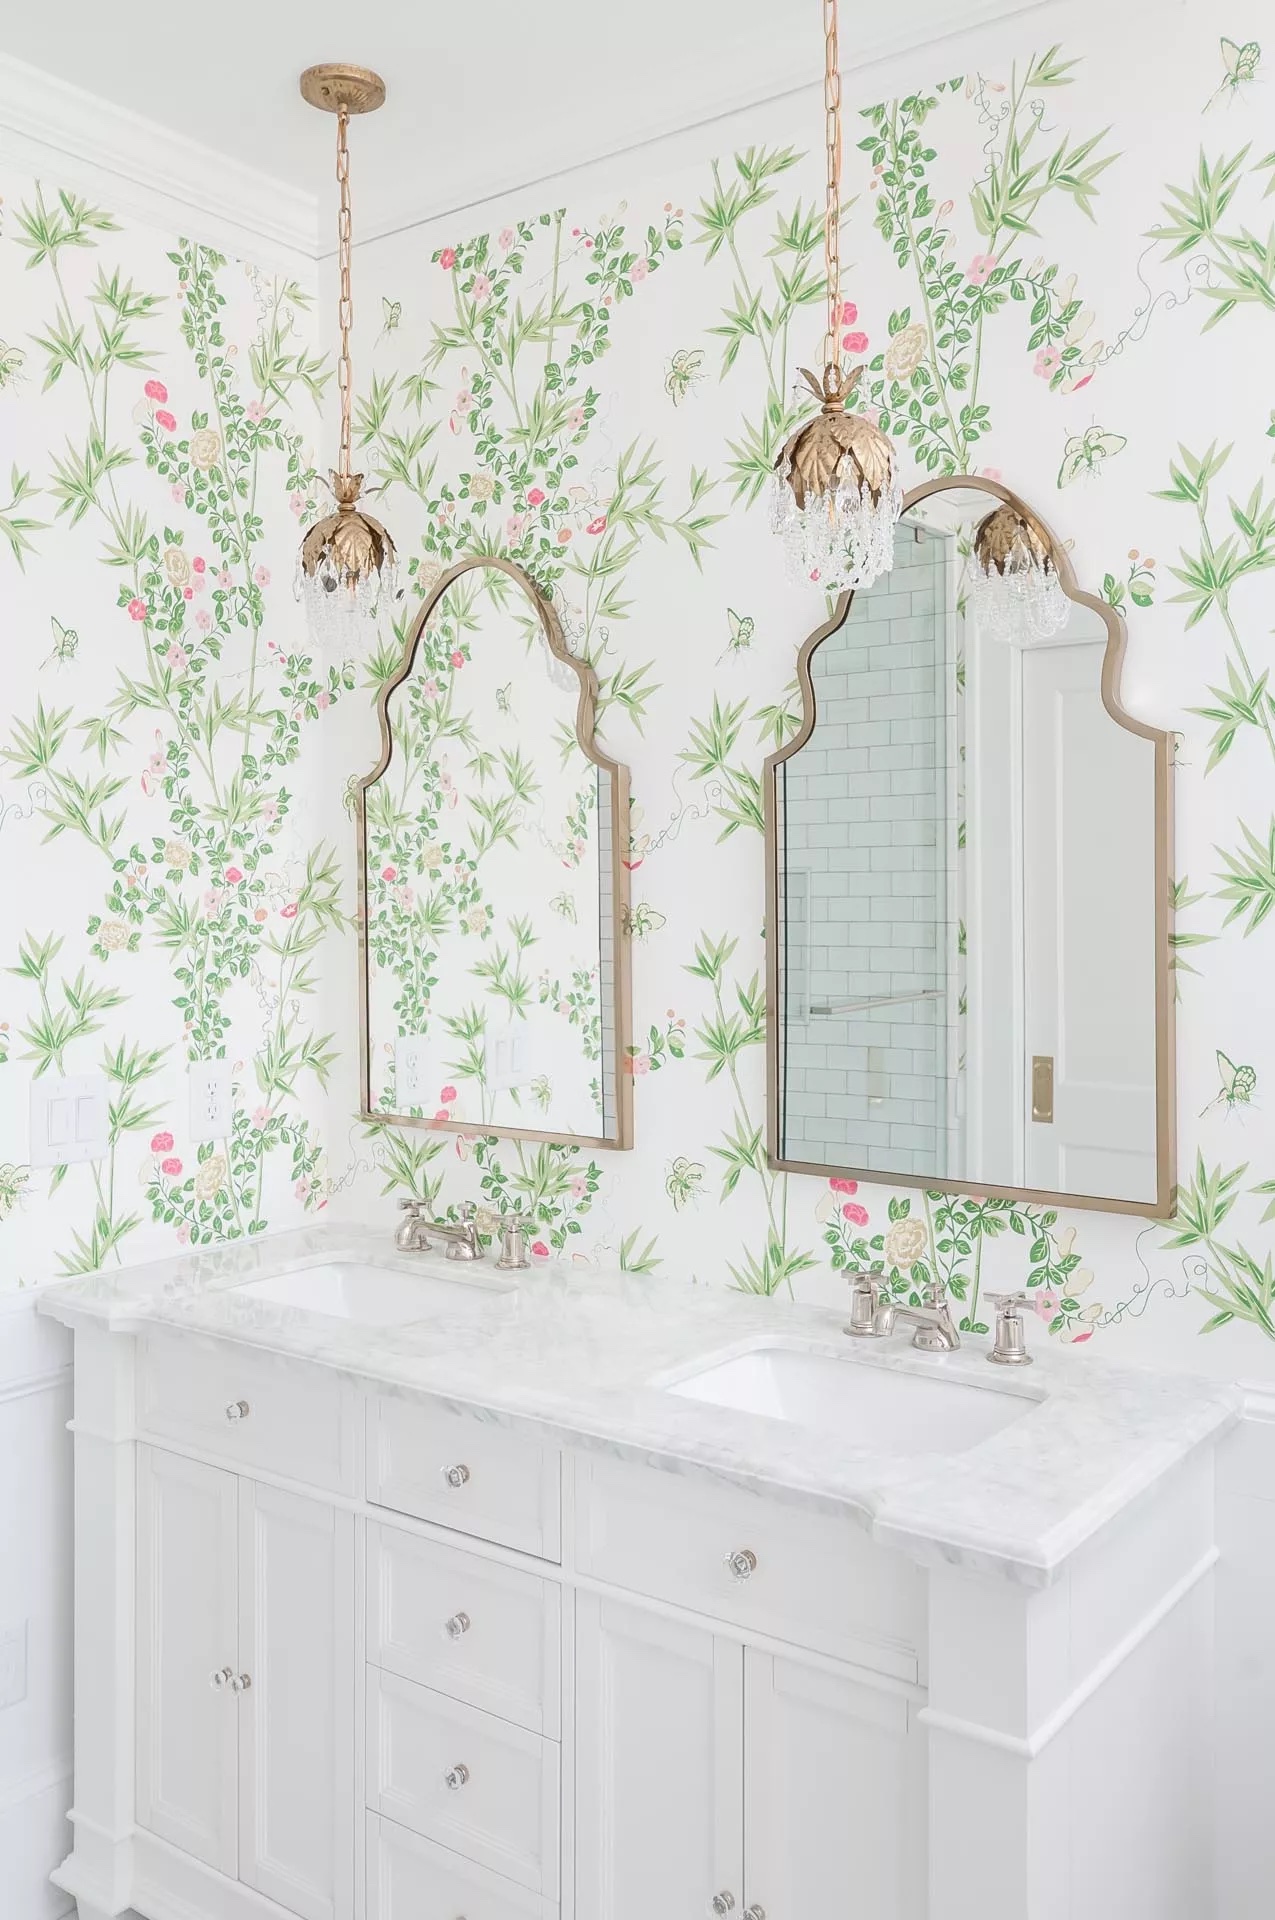 The Bathroom With Vintage Botanical Charm